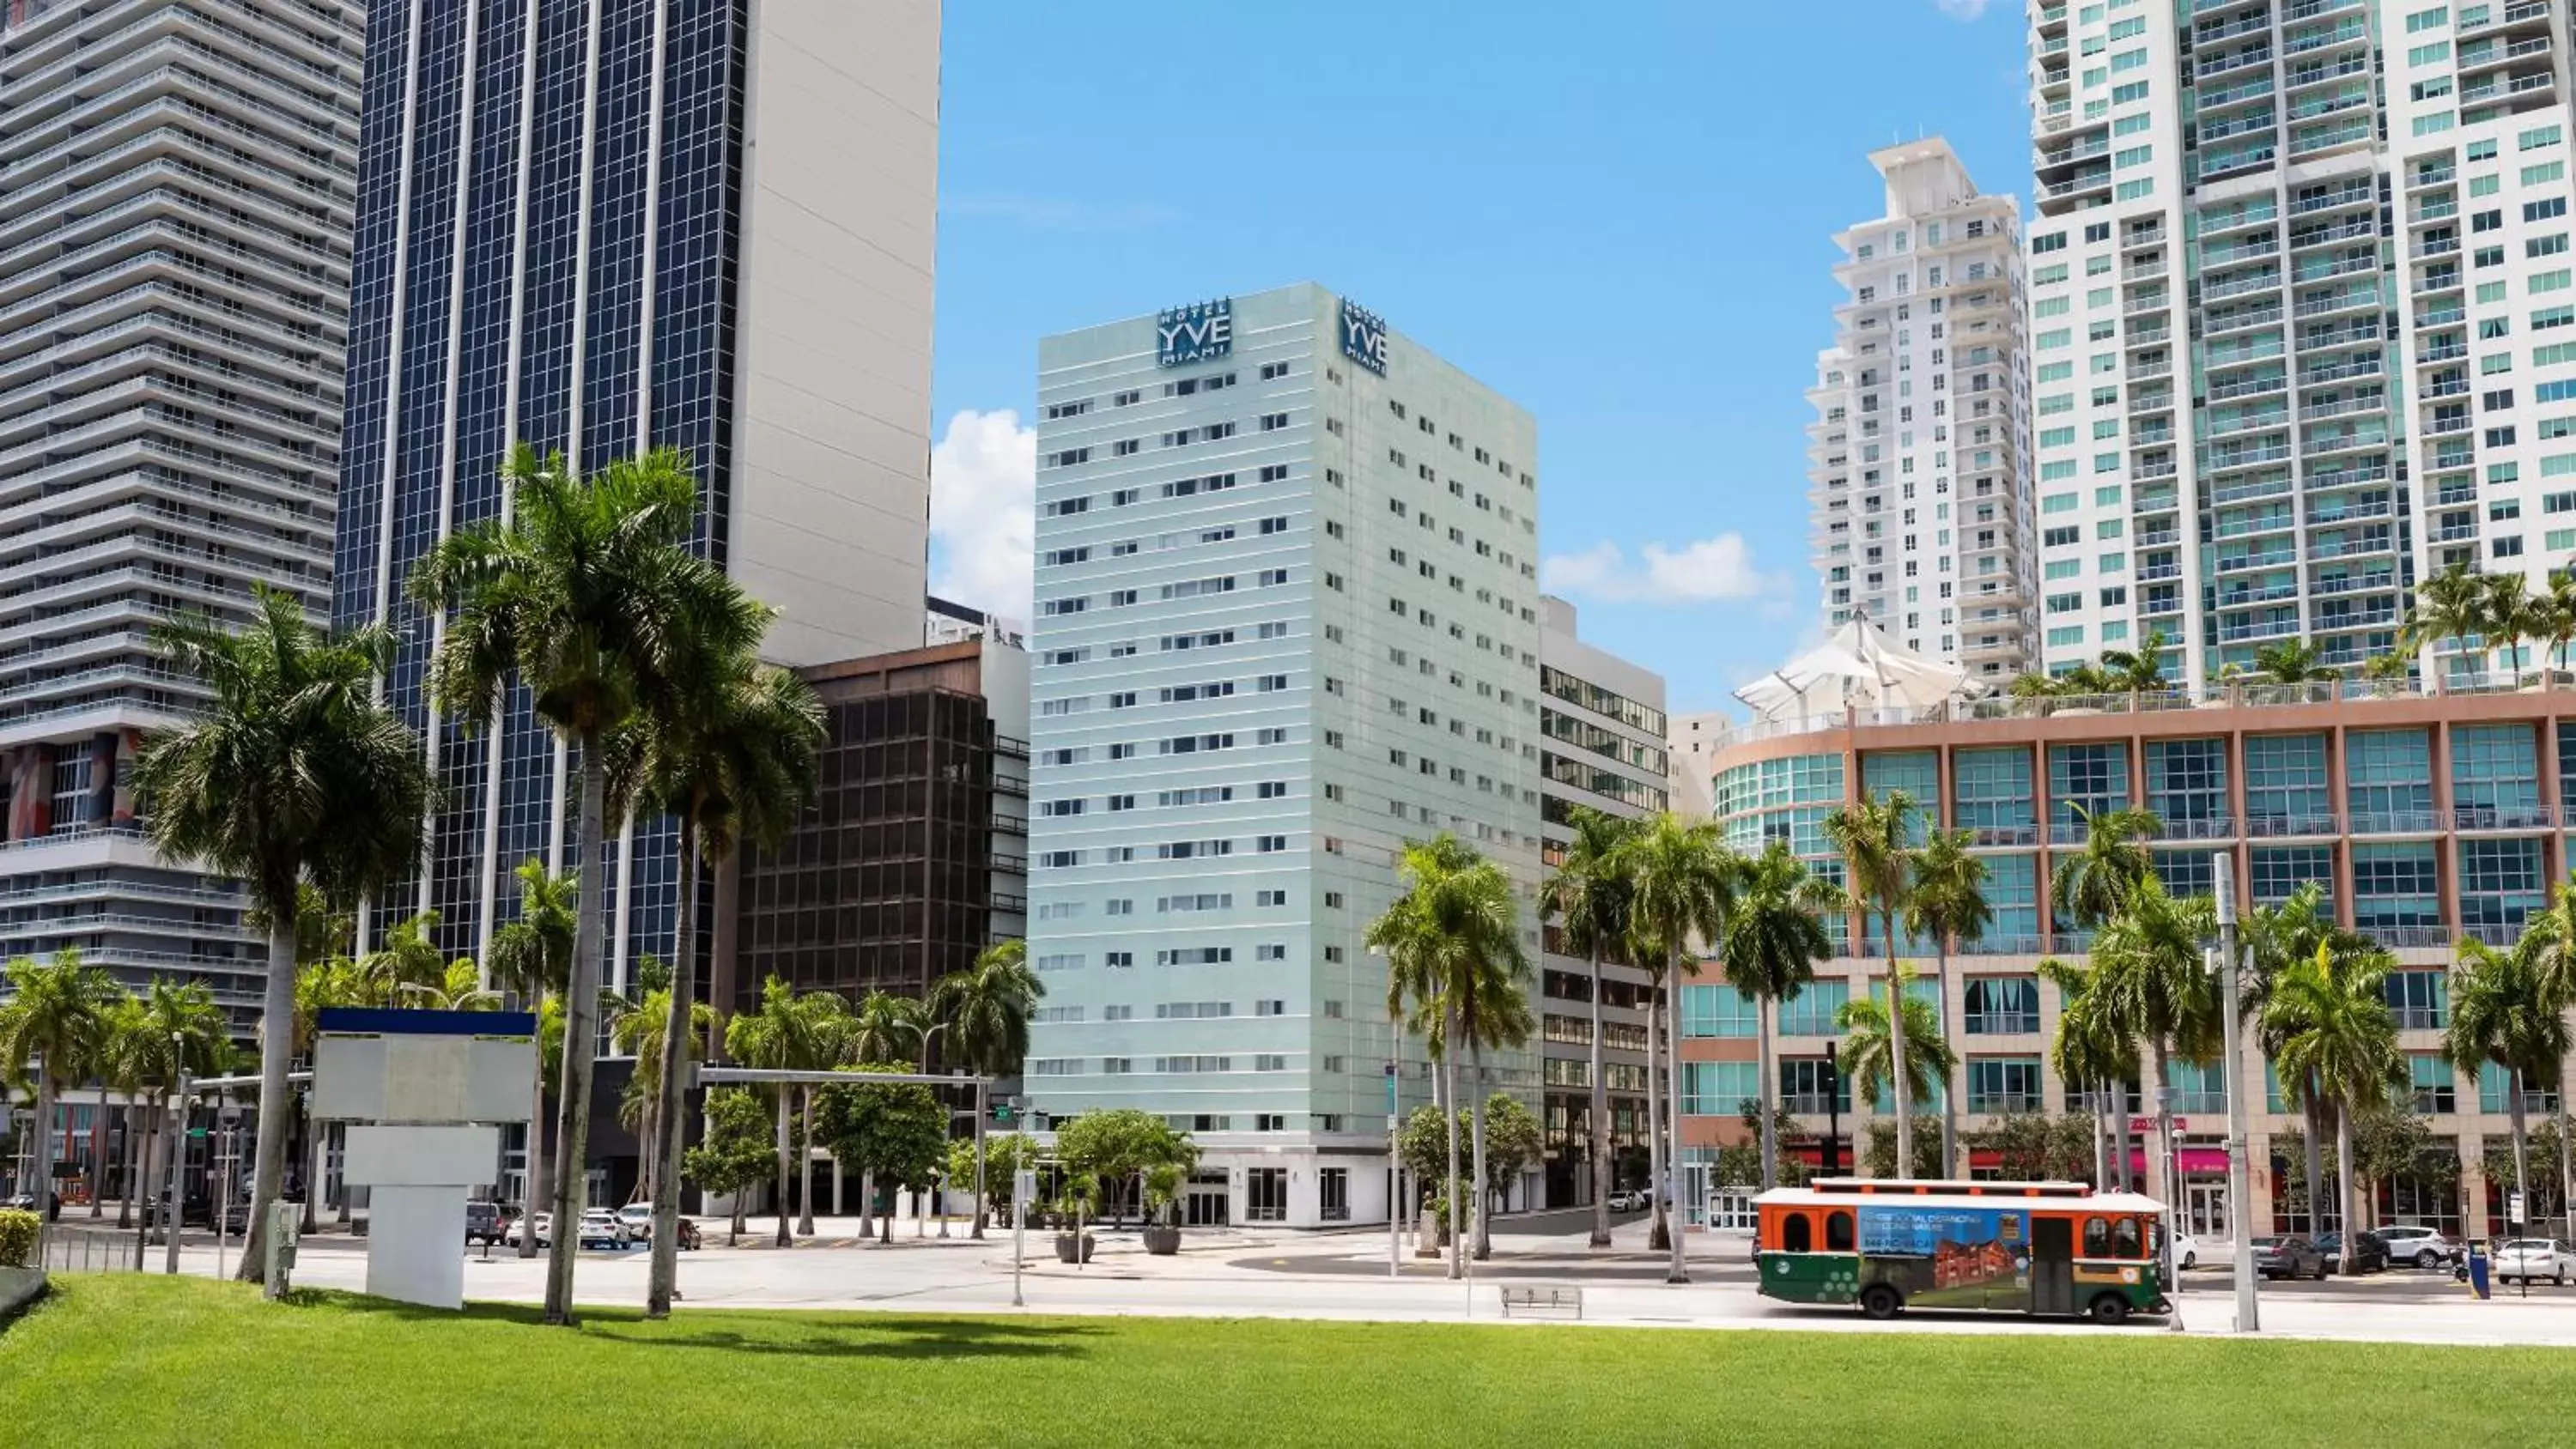 Property building in YVE Hotel Miami